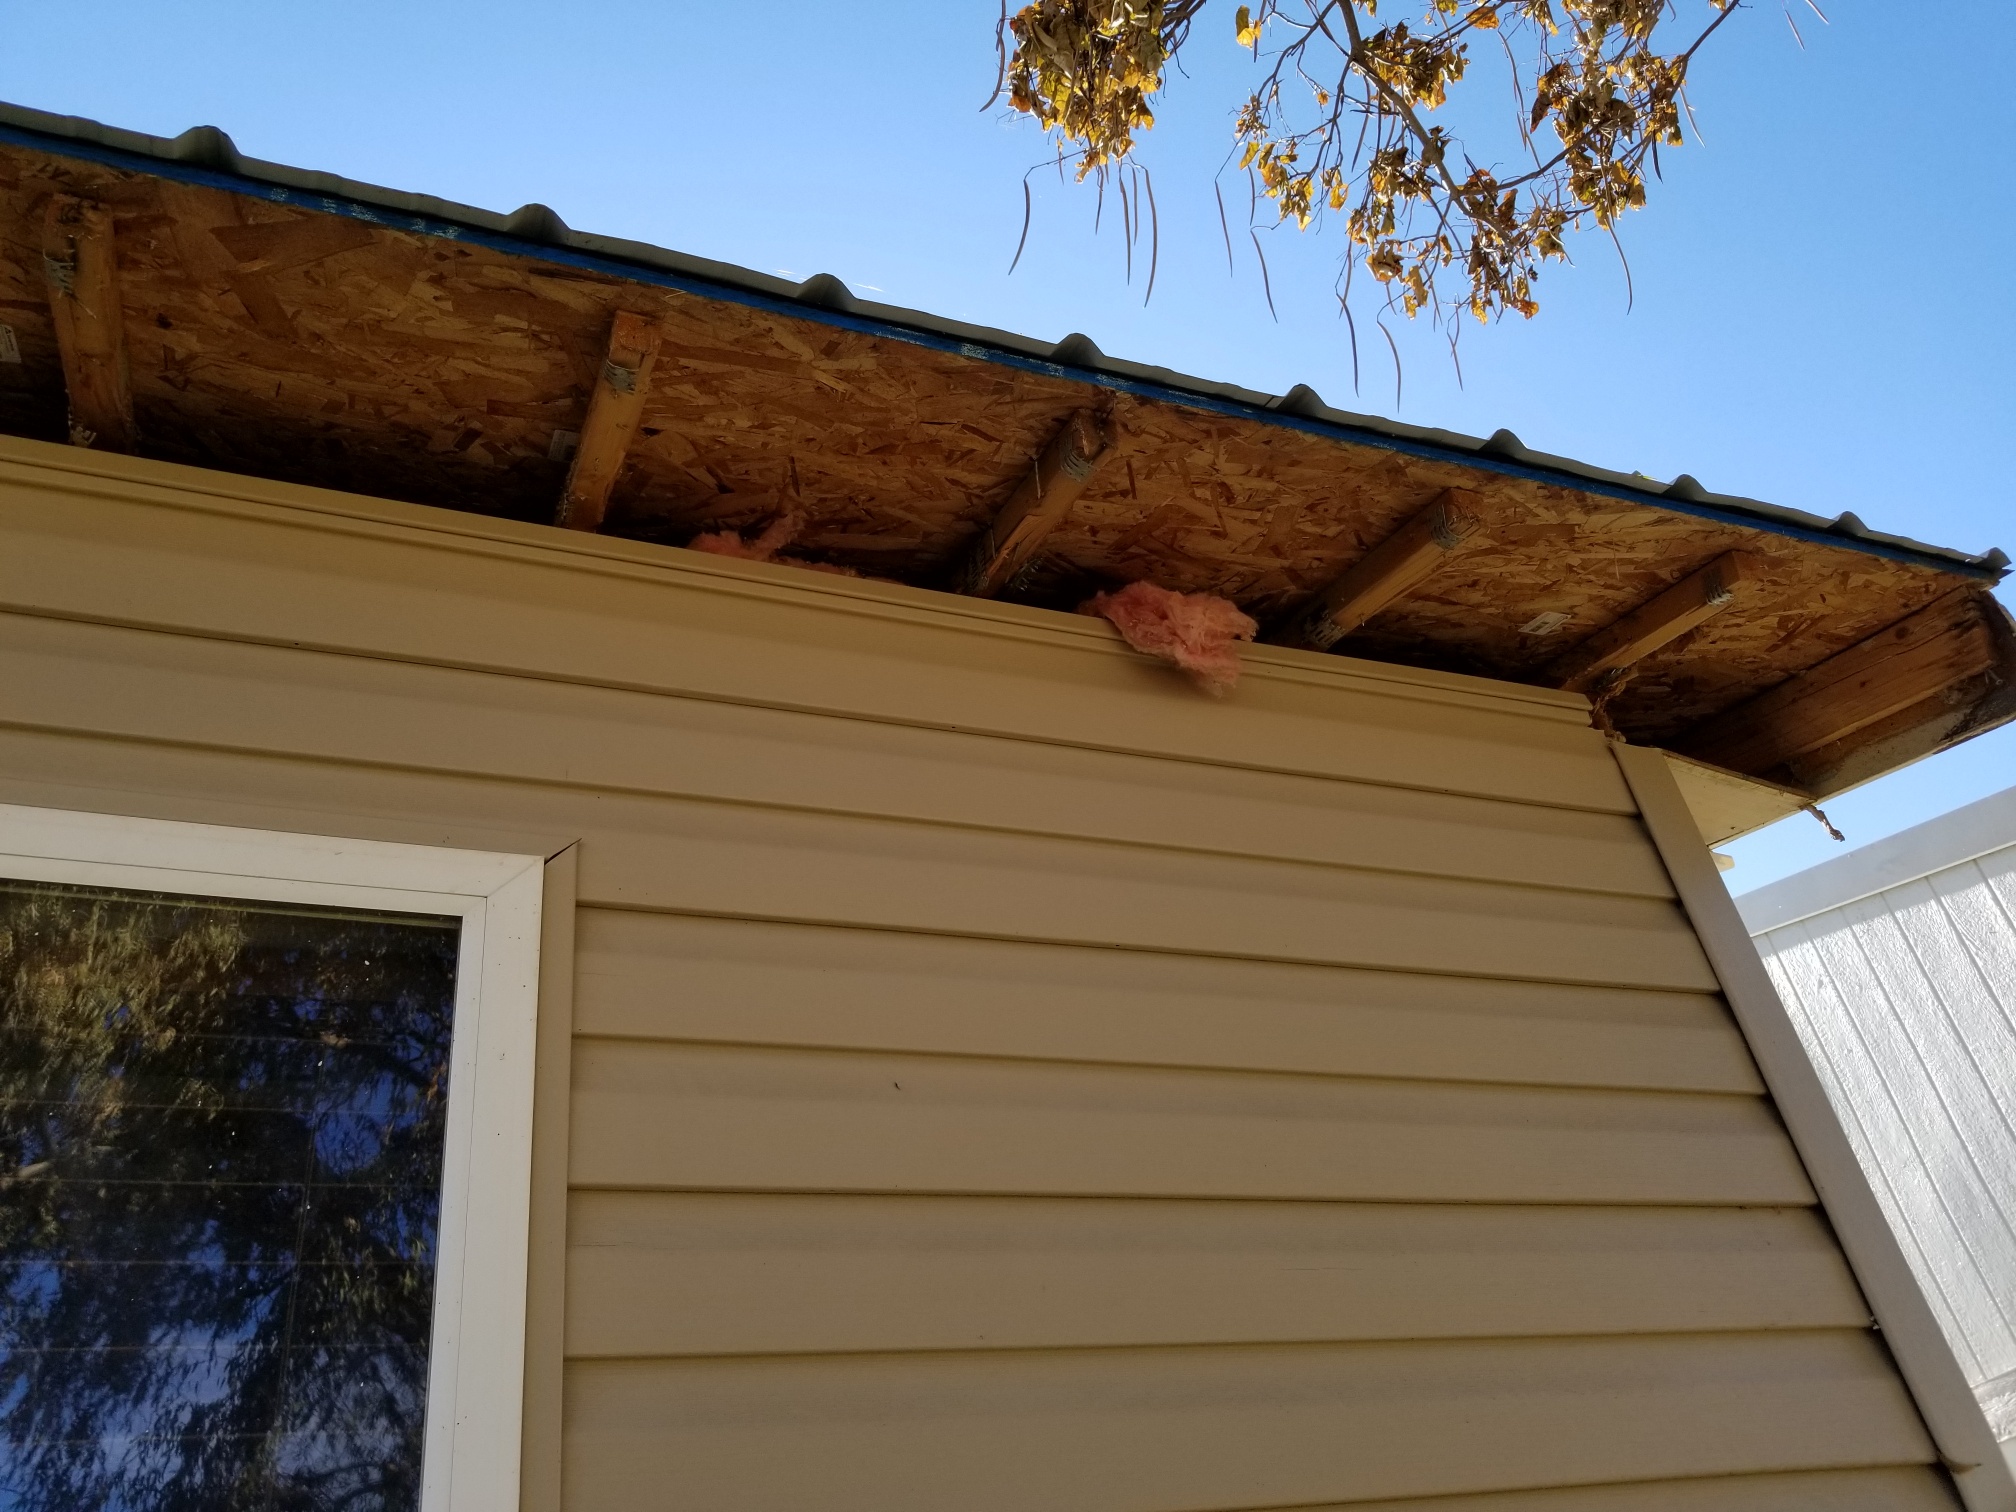 left roof open. Birds eating insulation